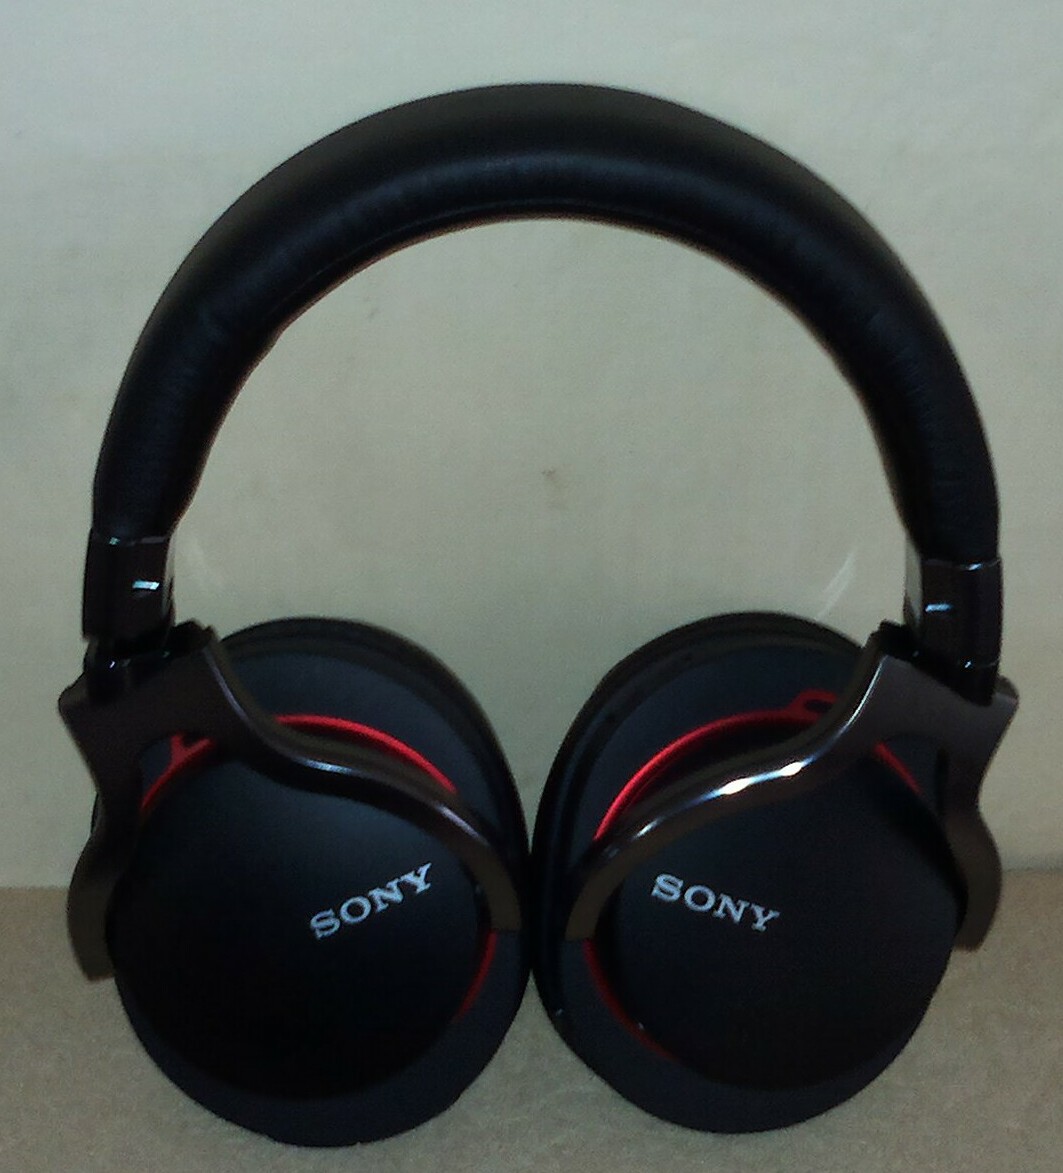  Sony MDR-1RBT bluetooth kulaklık